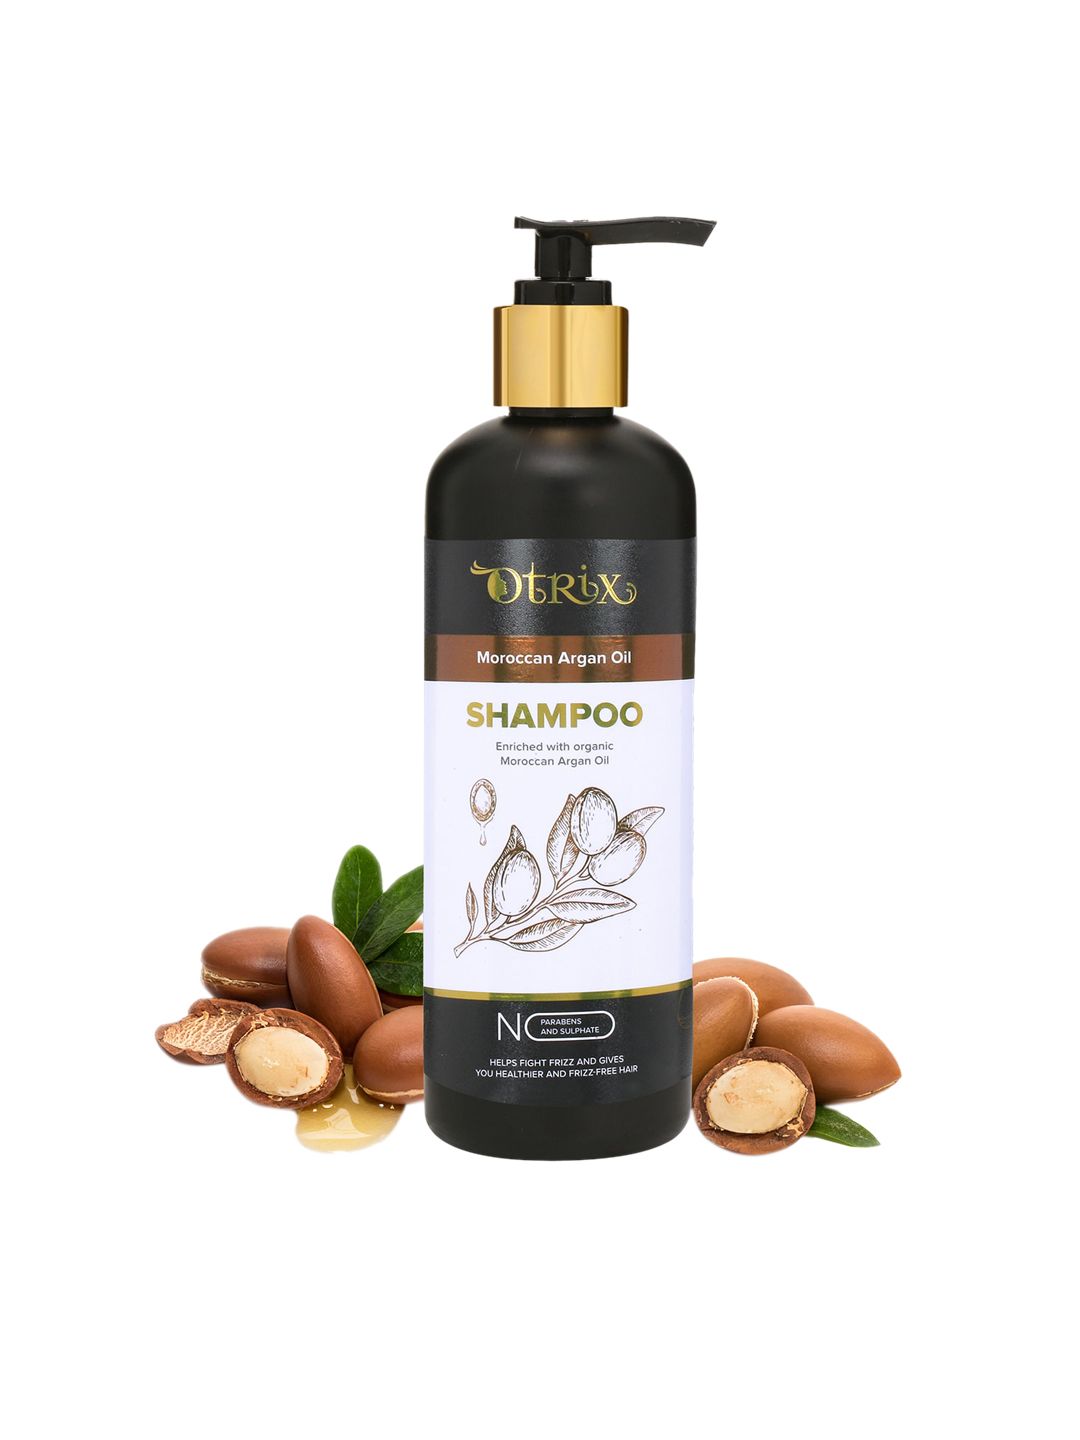 Otrix Moroccan Argan Oil Shampoo for Healthier & Frizz Free Hair - 300 ml Price in India